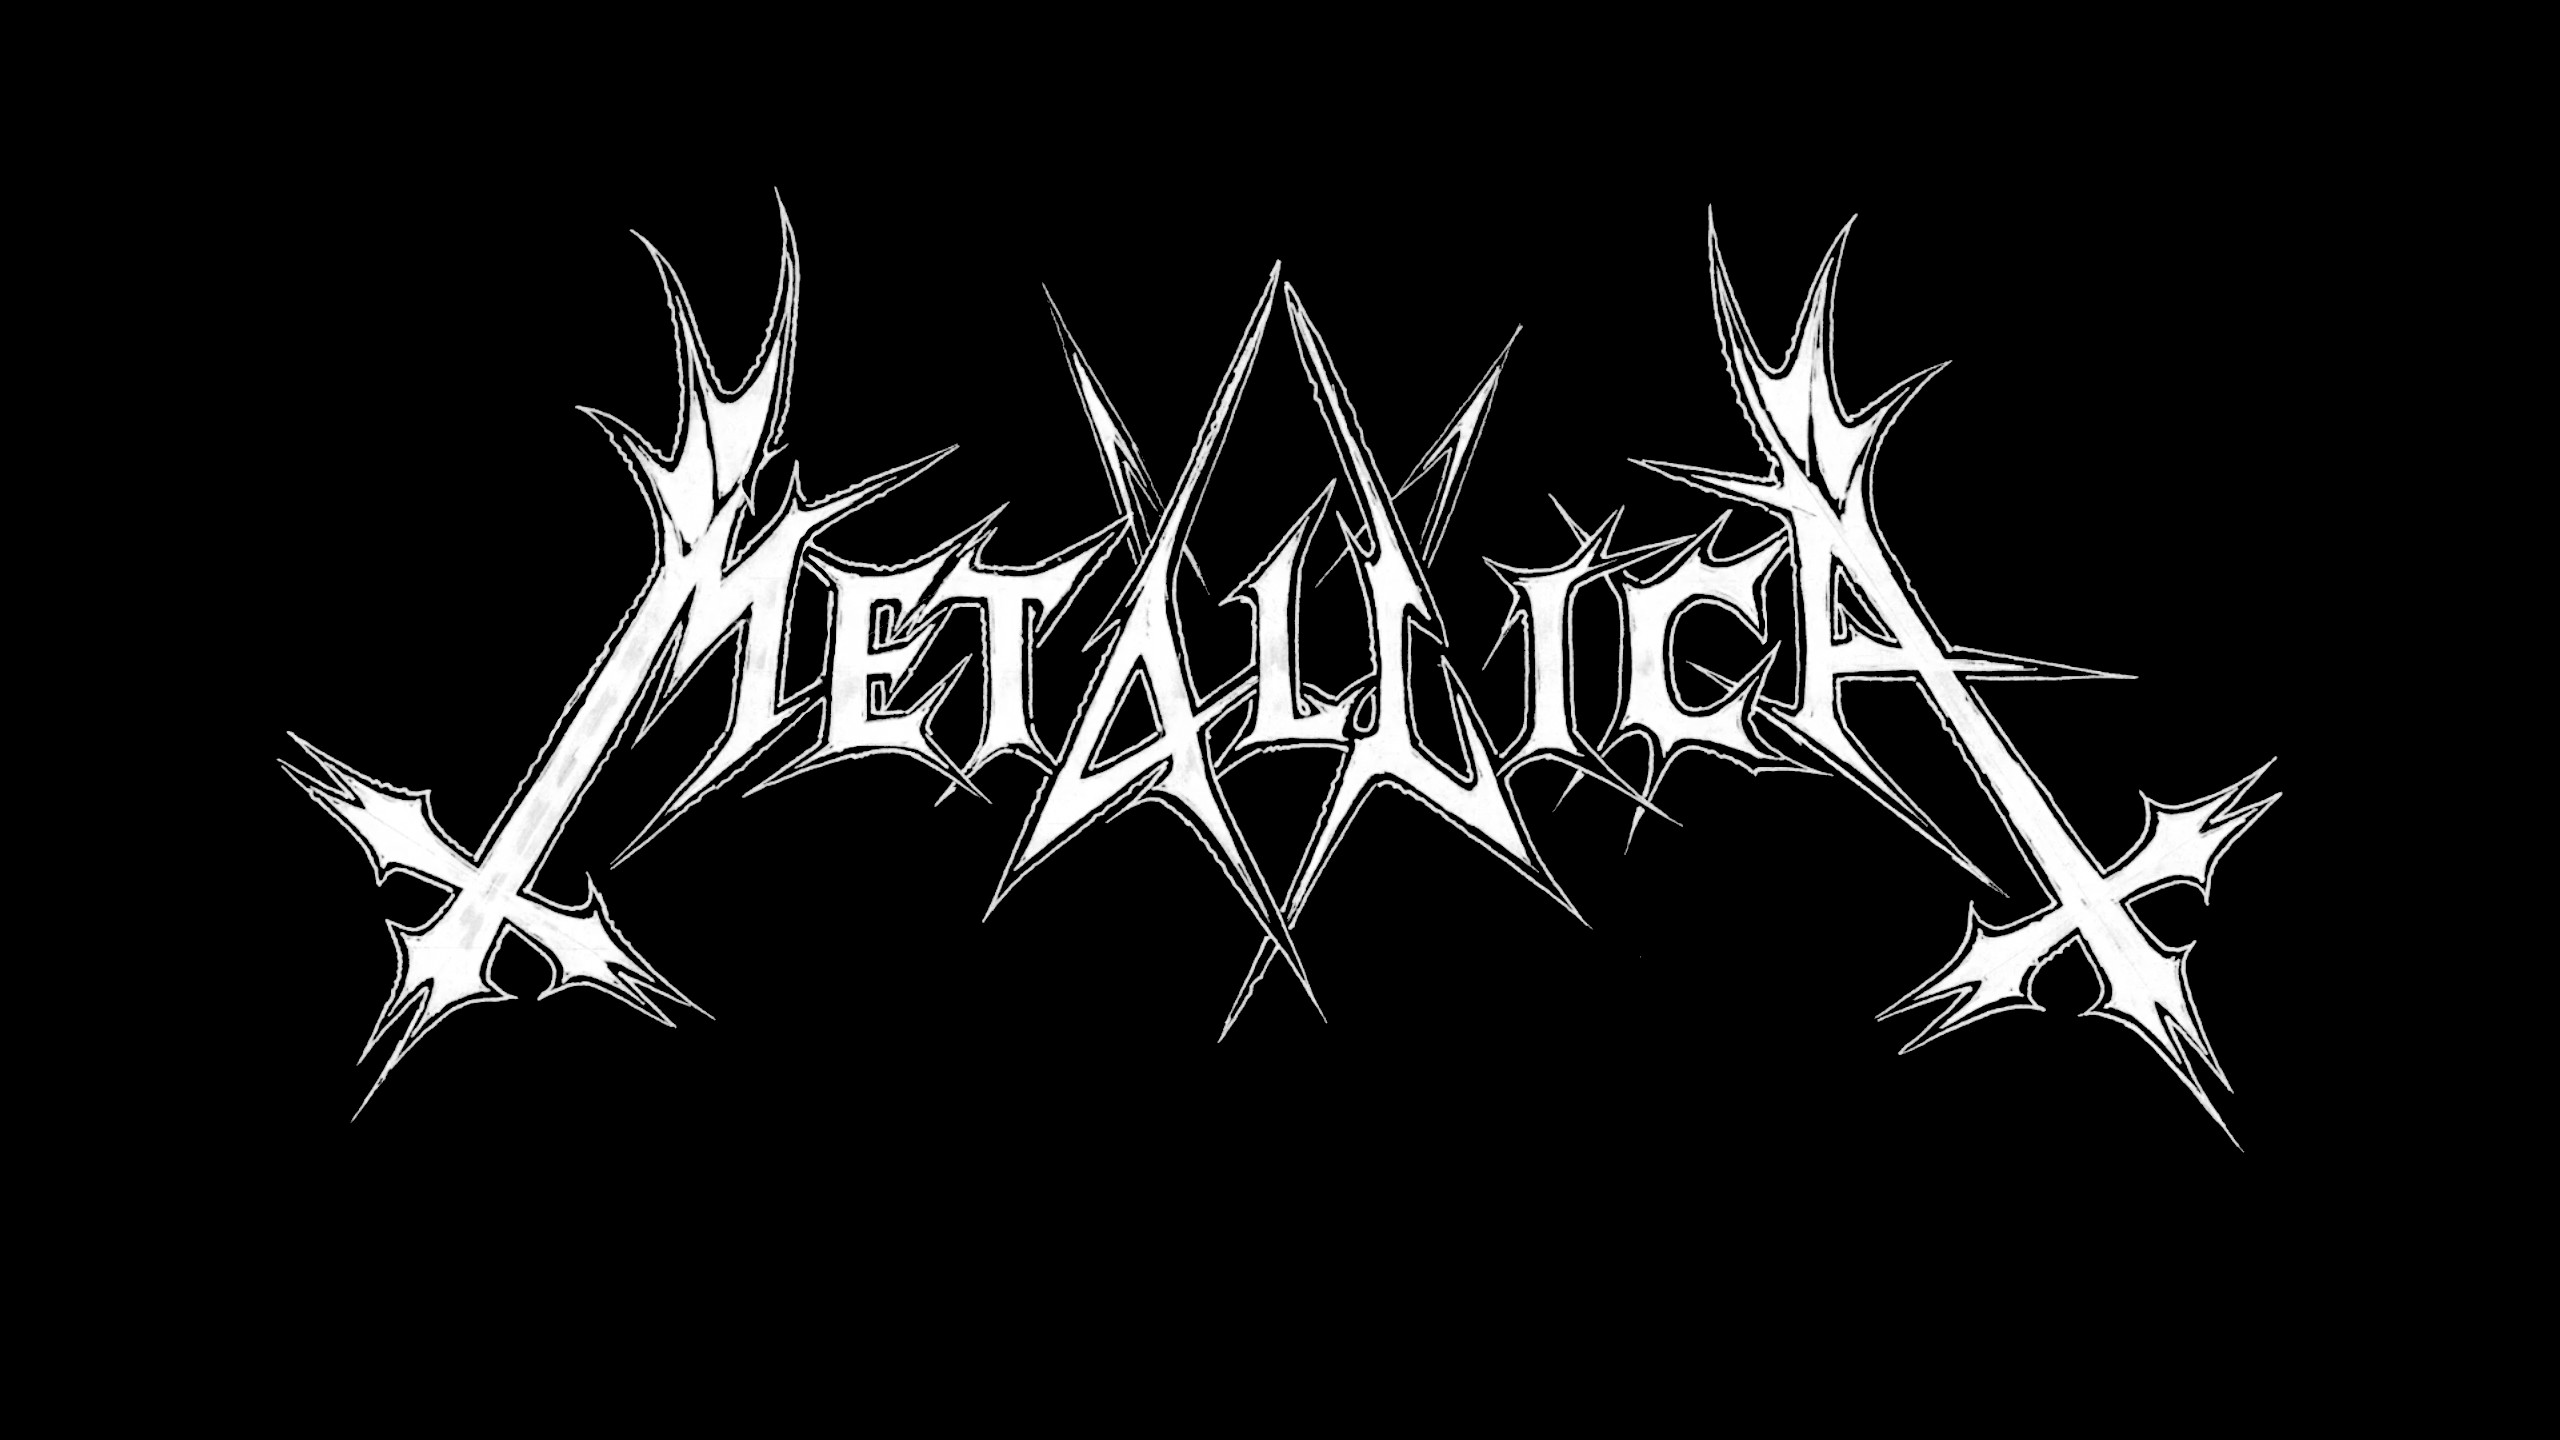 2560x1440 Metallica Mayhem logo - extracted from ManUNkind video ...